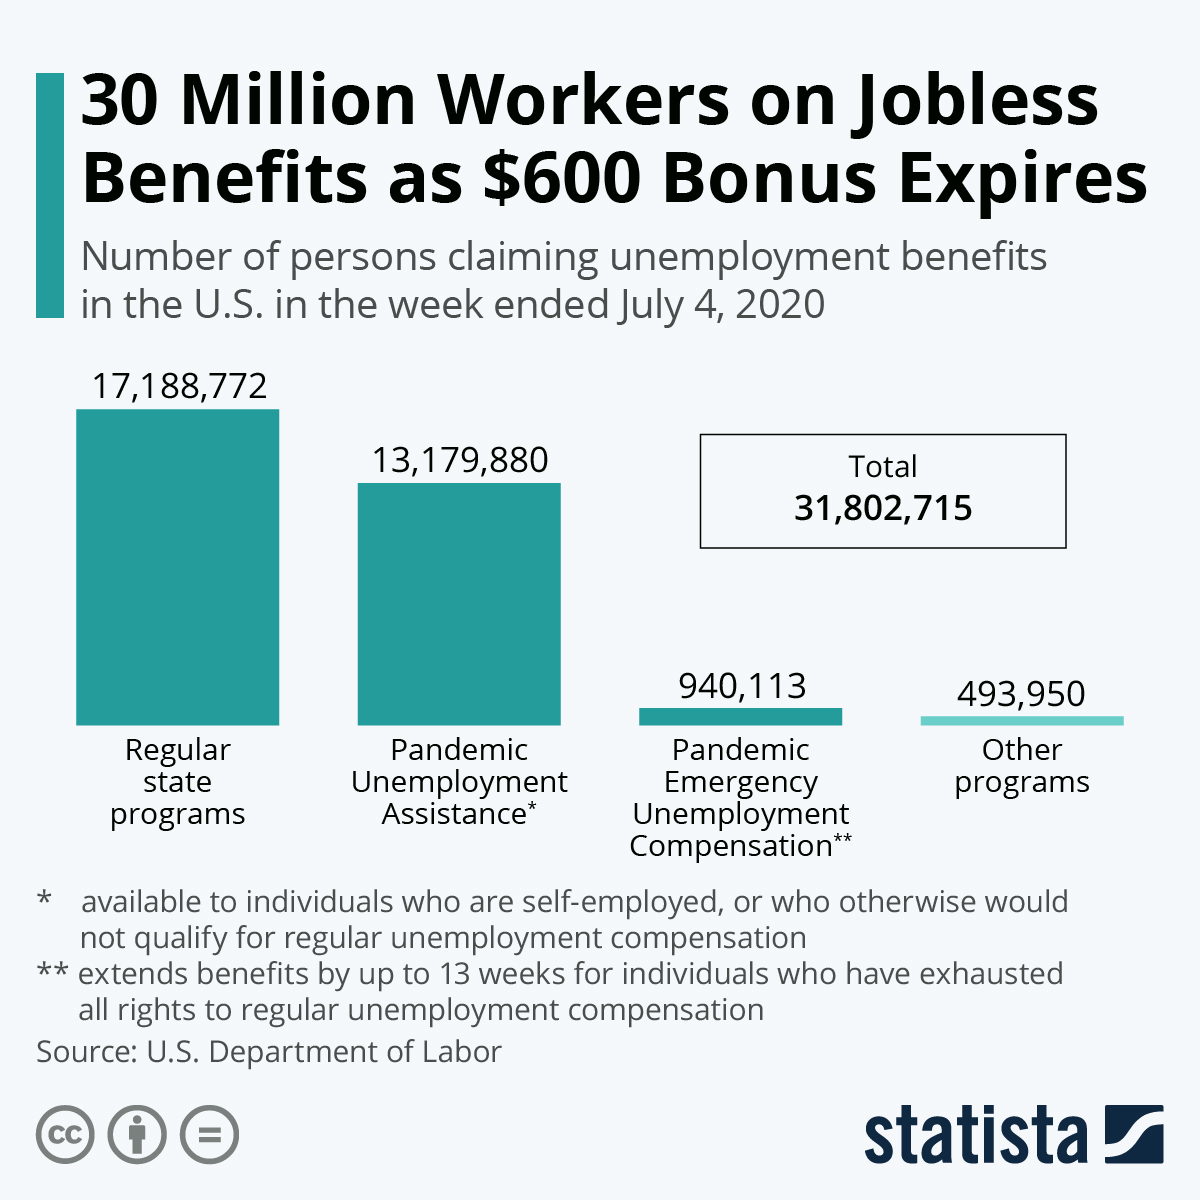 30 Million Workers on Jobless Benefits as $600 Bonus Expires